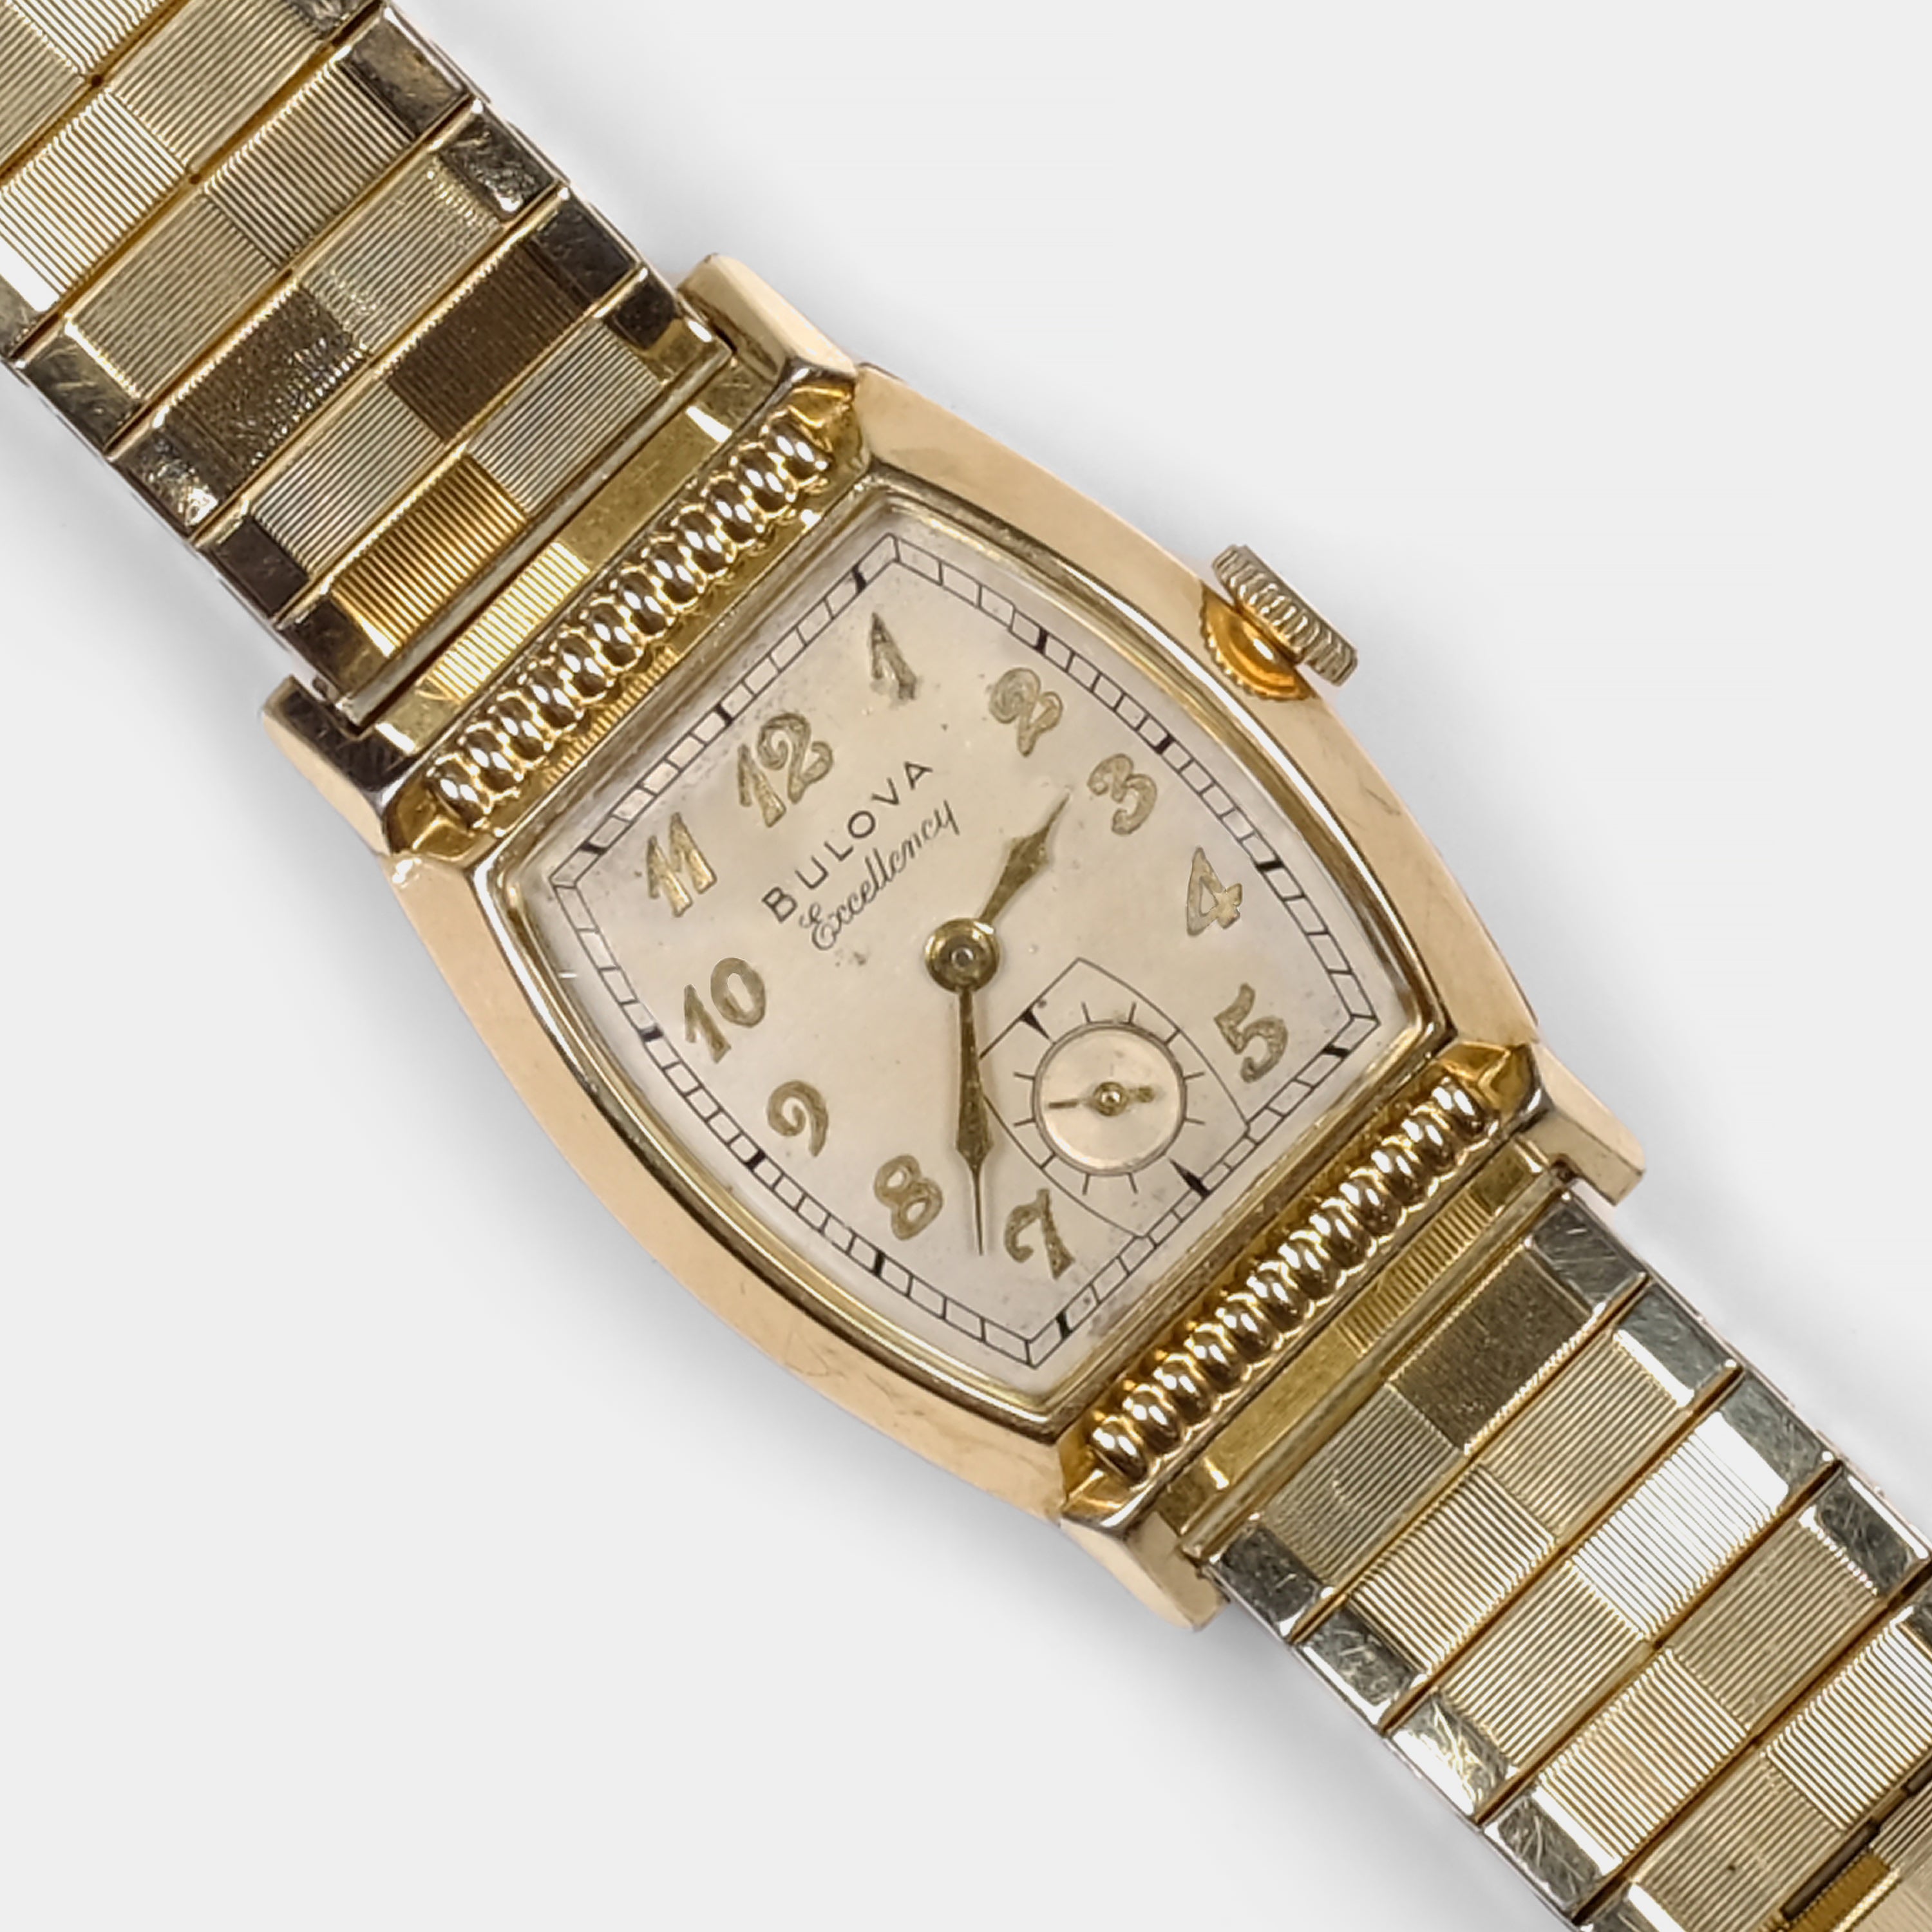 Bulova His Excellency "CC" A9 Date Code 1949 Wristwatch